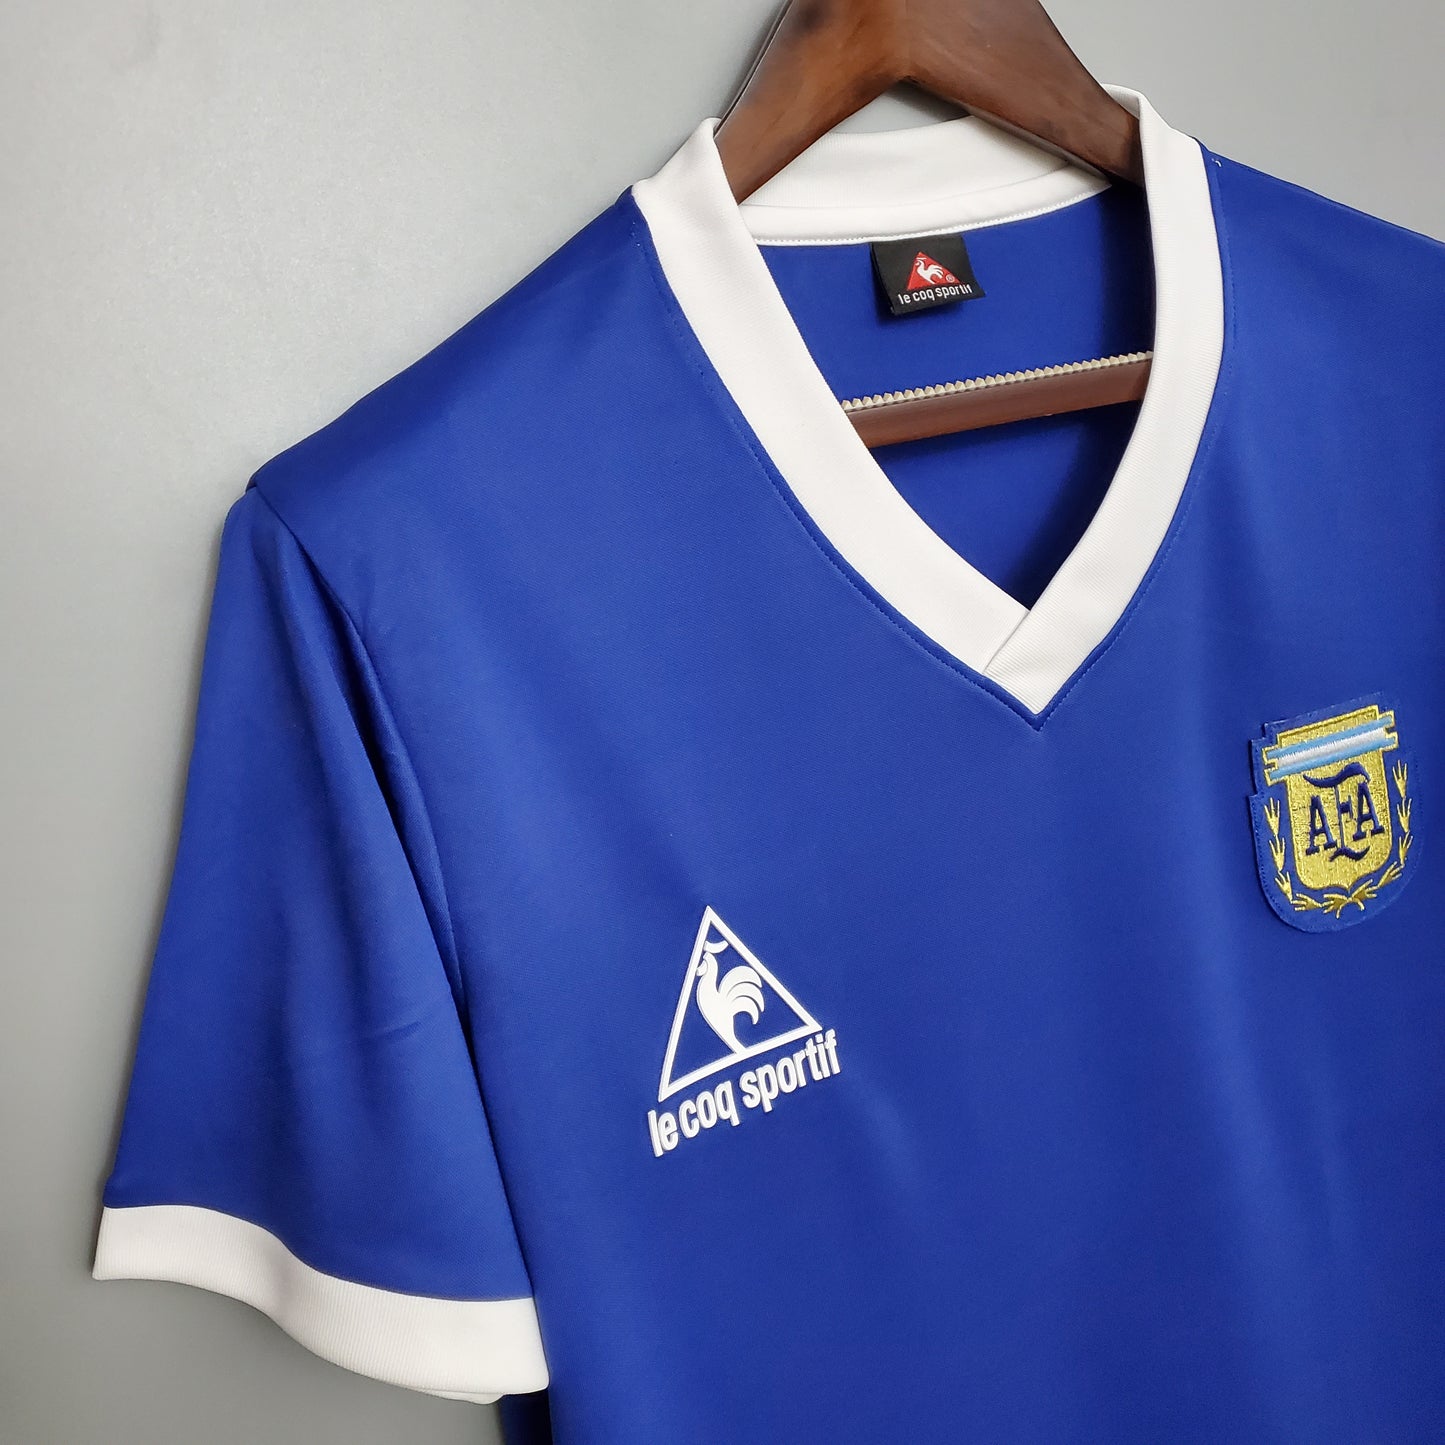 Argentina 1986 Away Jersey - World Cup Winners